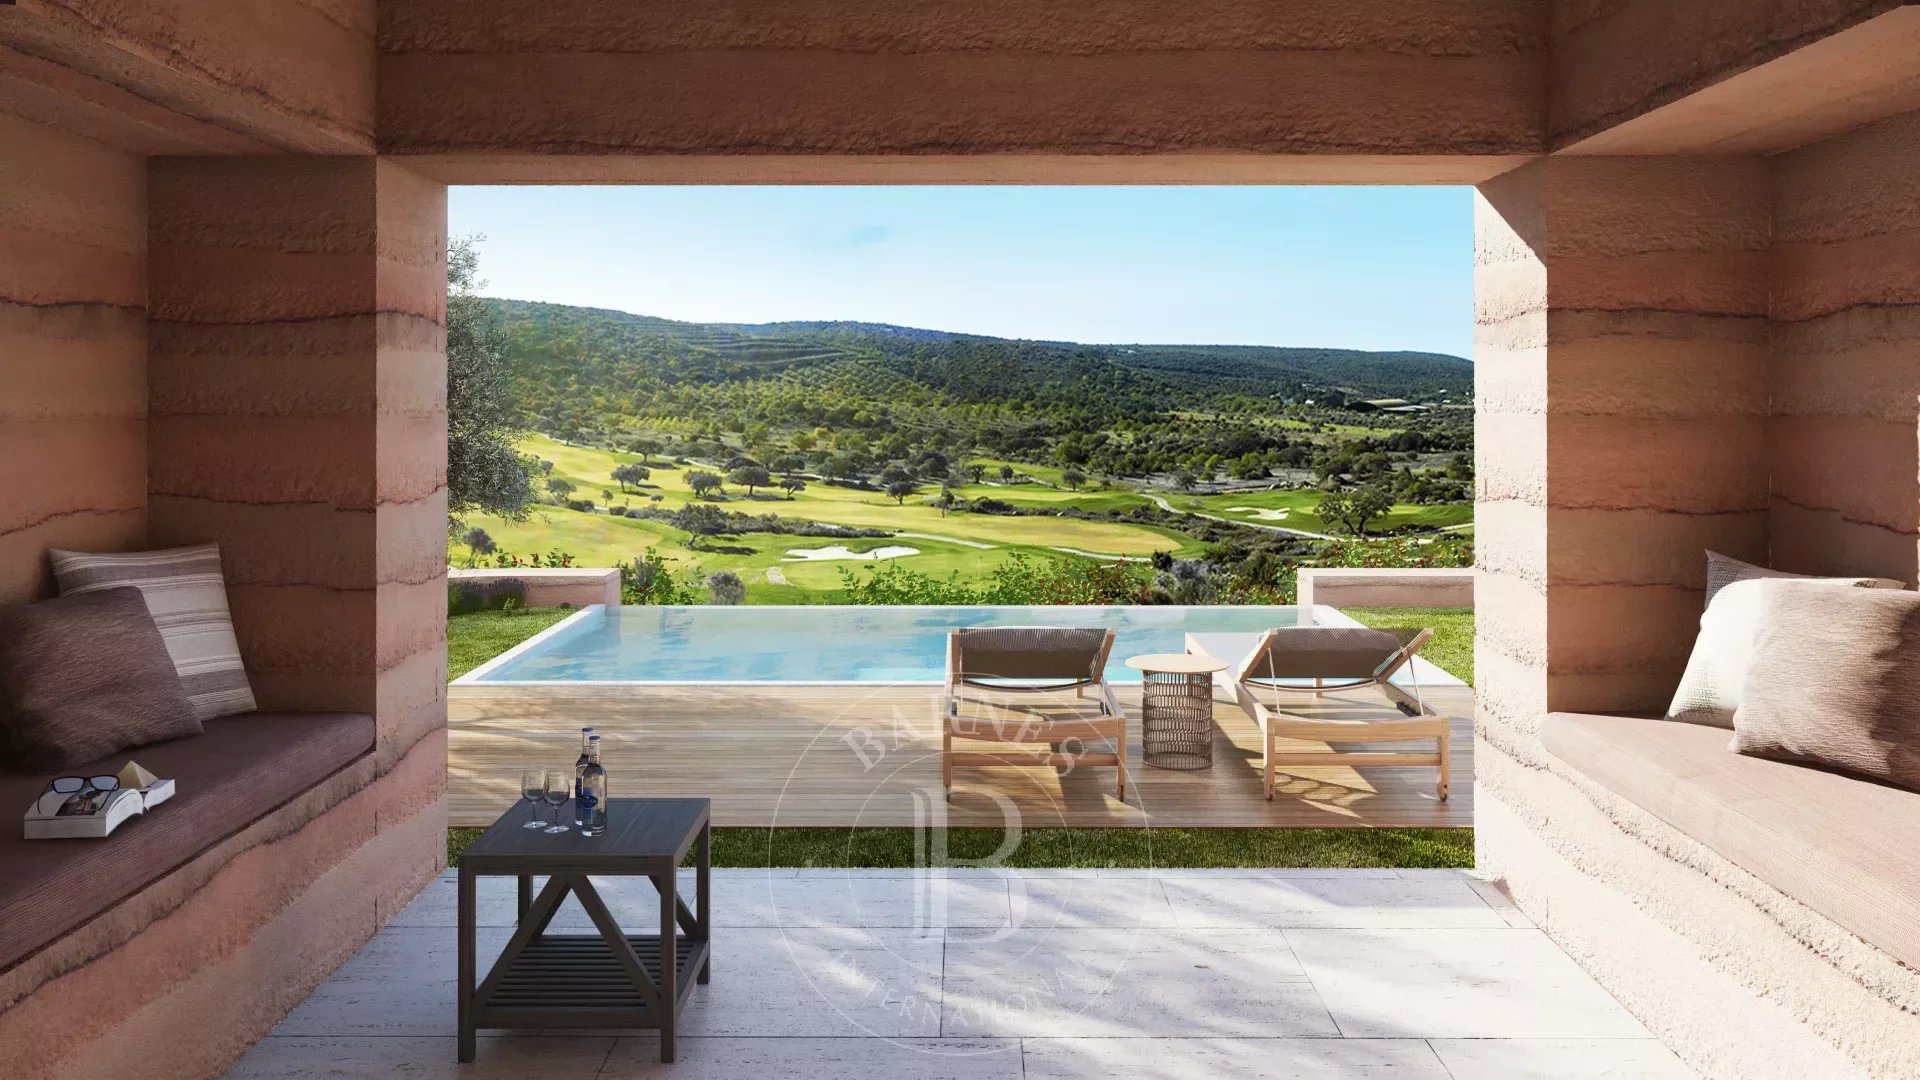 Investing in a luxury resort in the Algarve